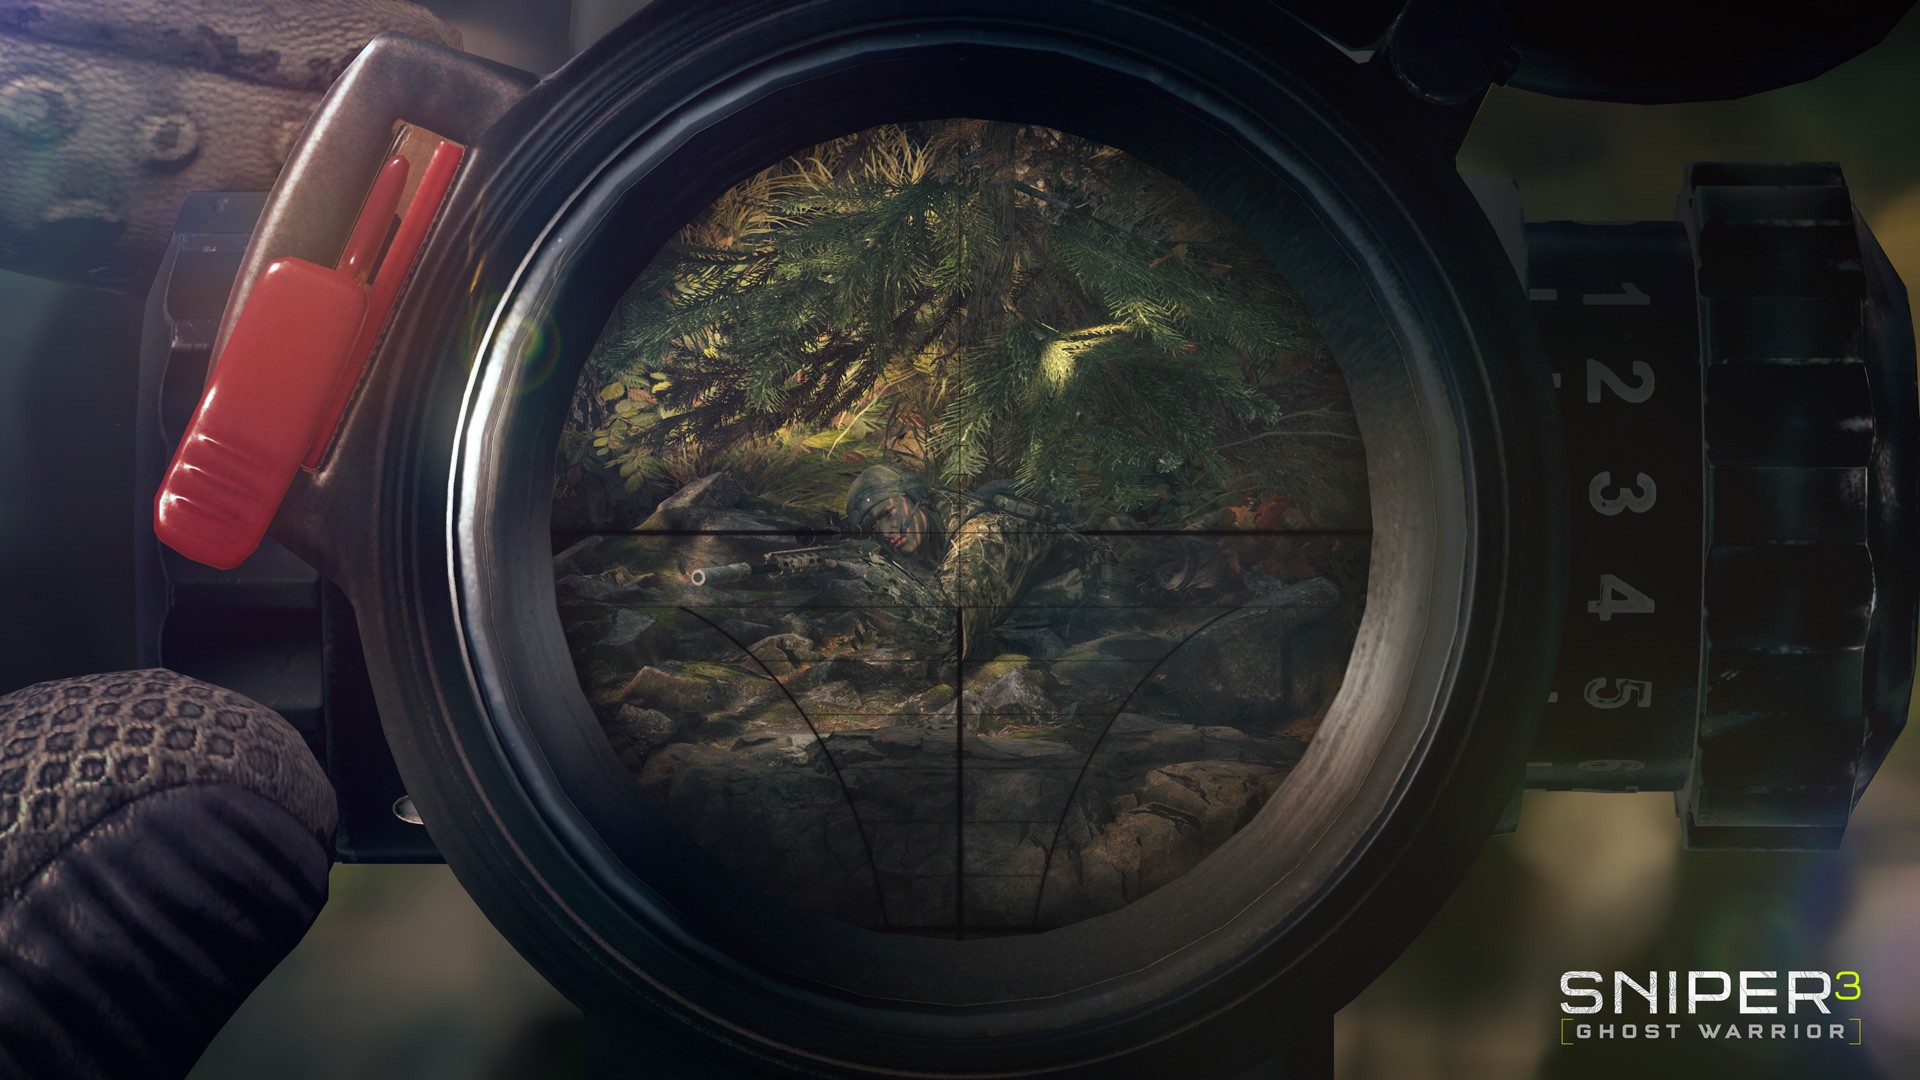 Jogo Sniper 3 Ghost Warrior: Season Pass Edition para PS4 Tiro